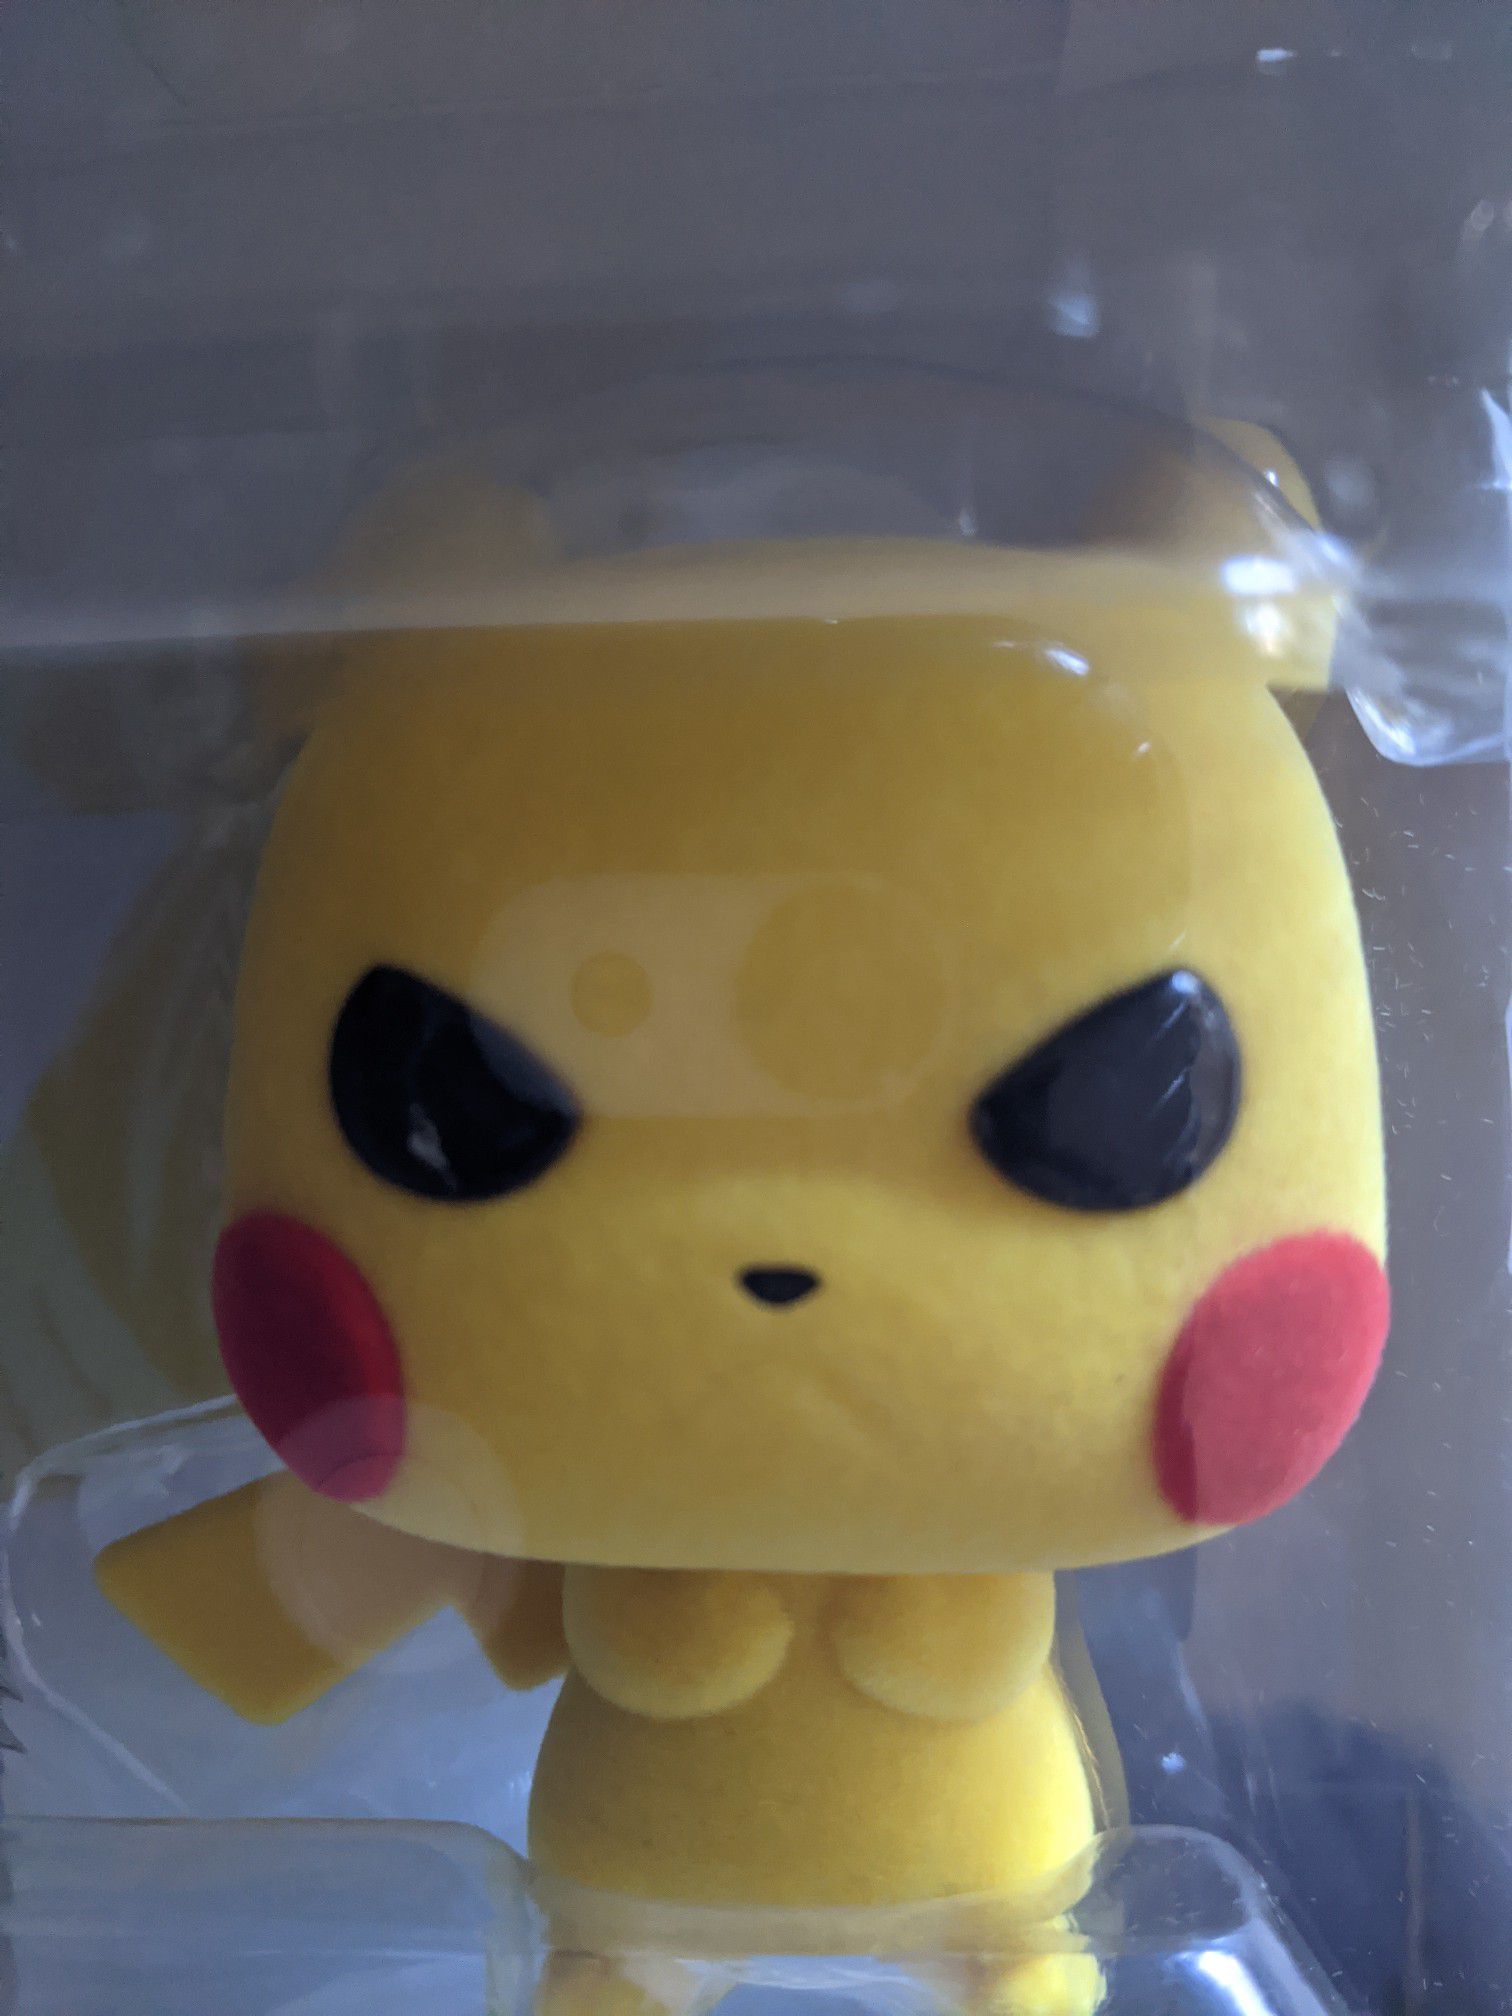 Pikachu Grumpy Flocked - Pokemon New York Comic Con Exclusive POP! Vinyl